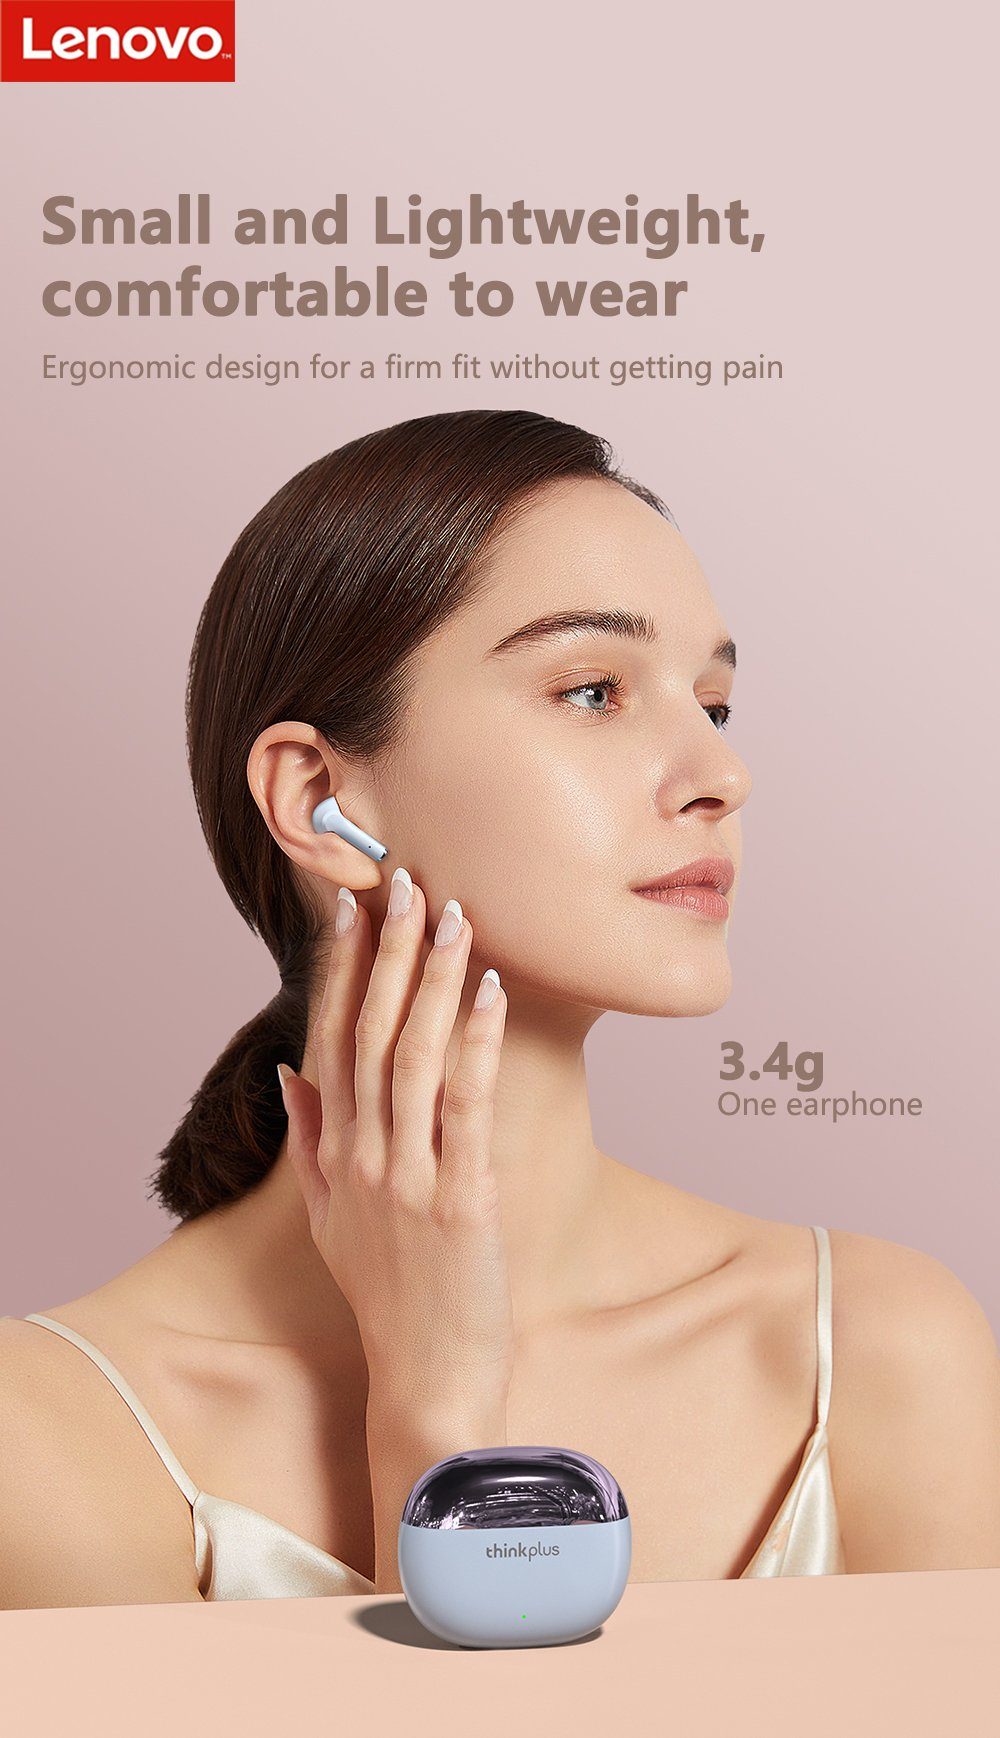 Lenovo X15 Pro mAh 5.1, Bluetooth-Kopfhörer Wireless, Assistant, (True mit Bluetooth - Stereo kabellos, 250 Headset Kopfhörer-Ladehülle mit Rosa) Siri, Touch-Steuerung Google